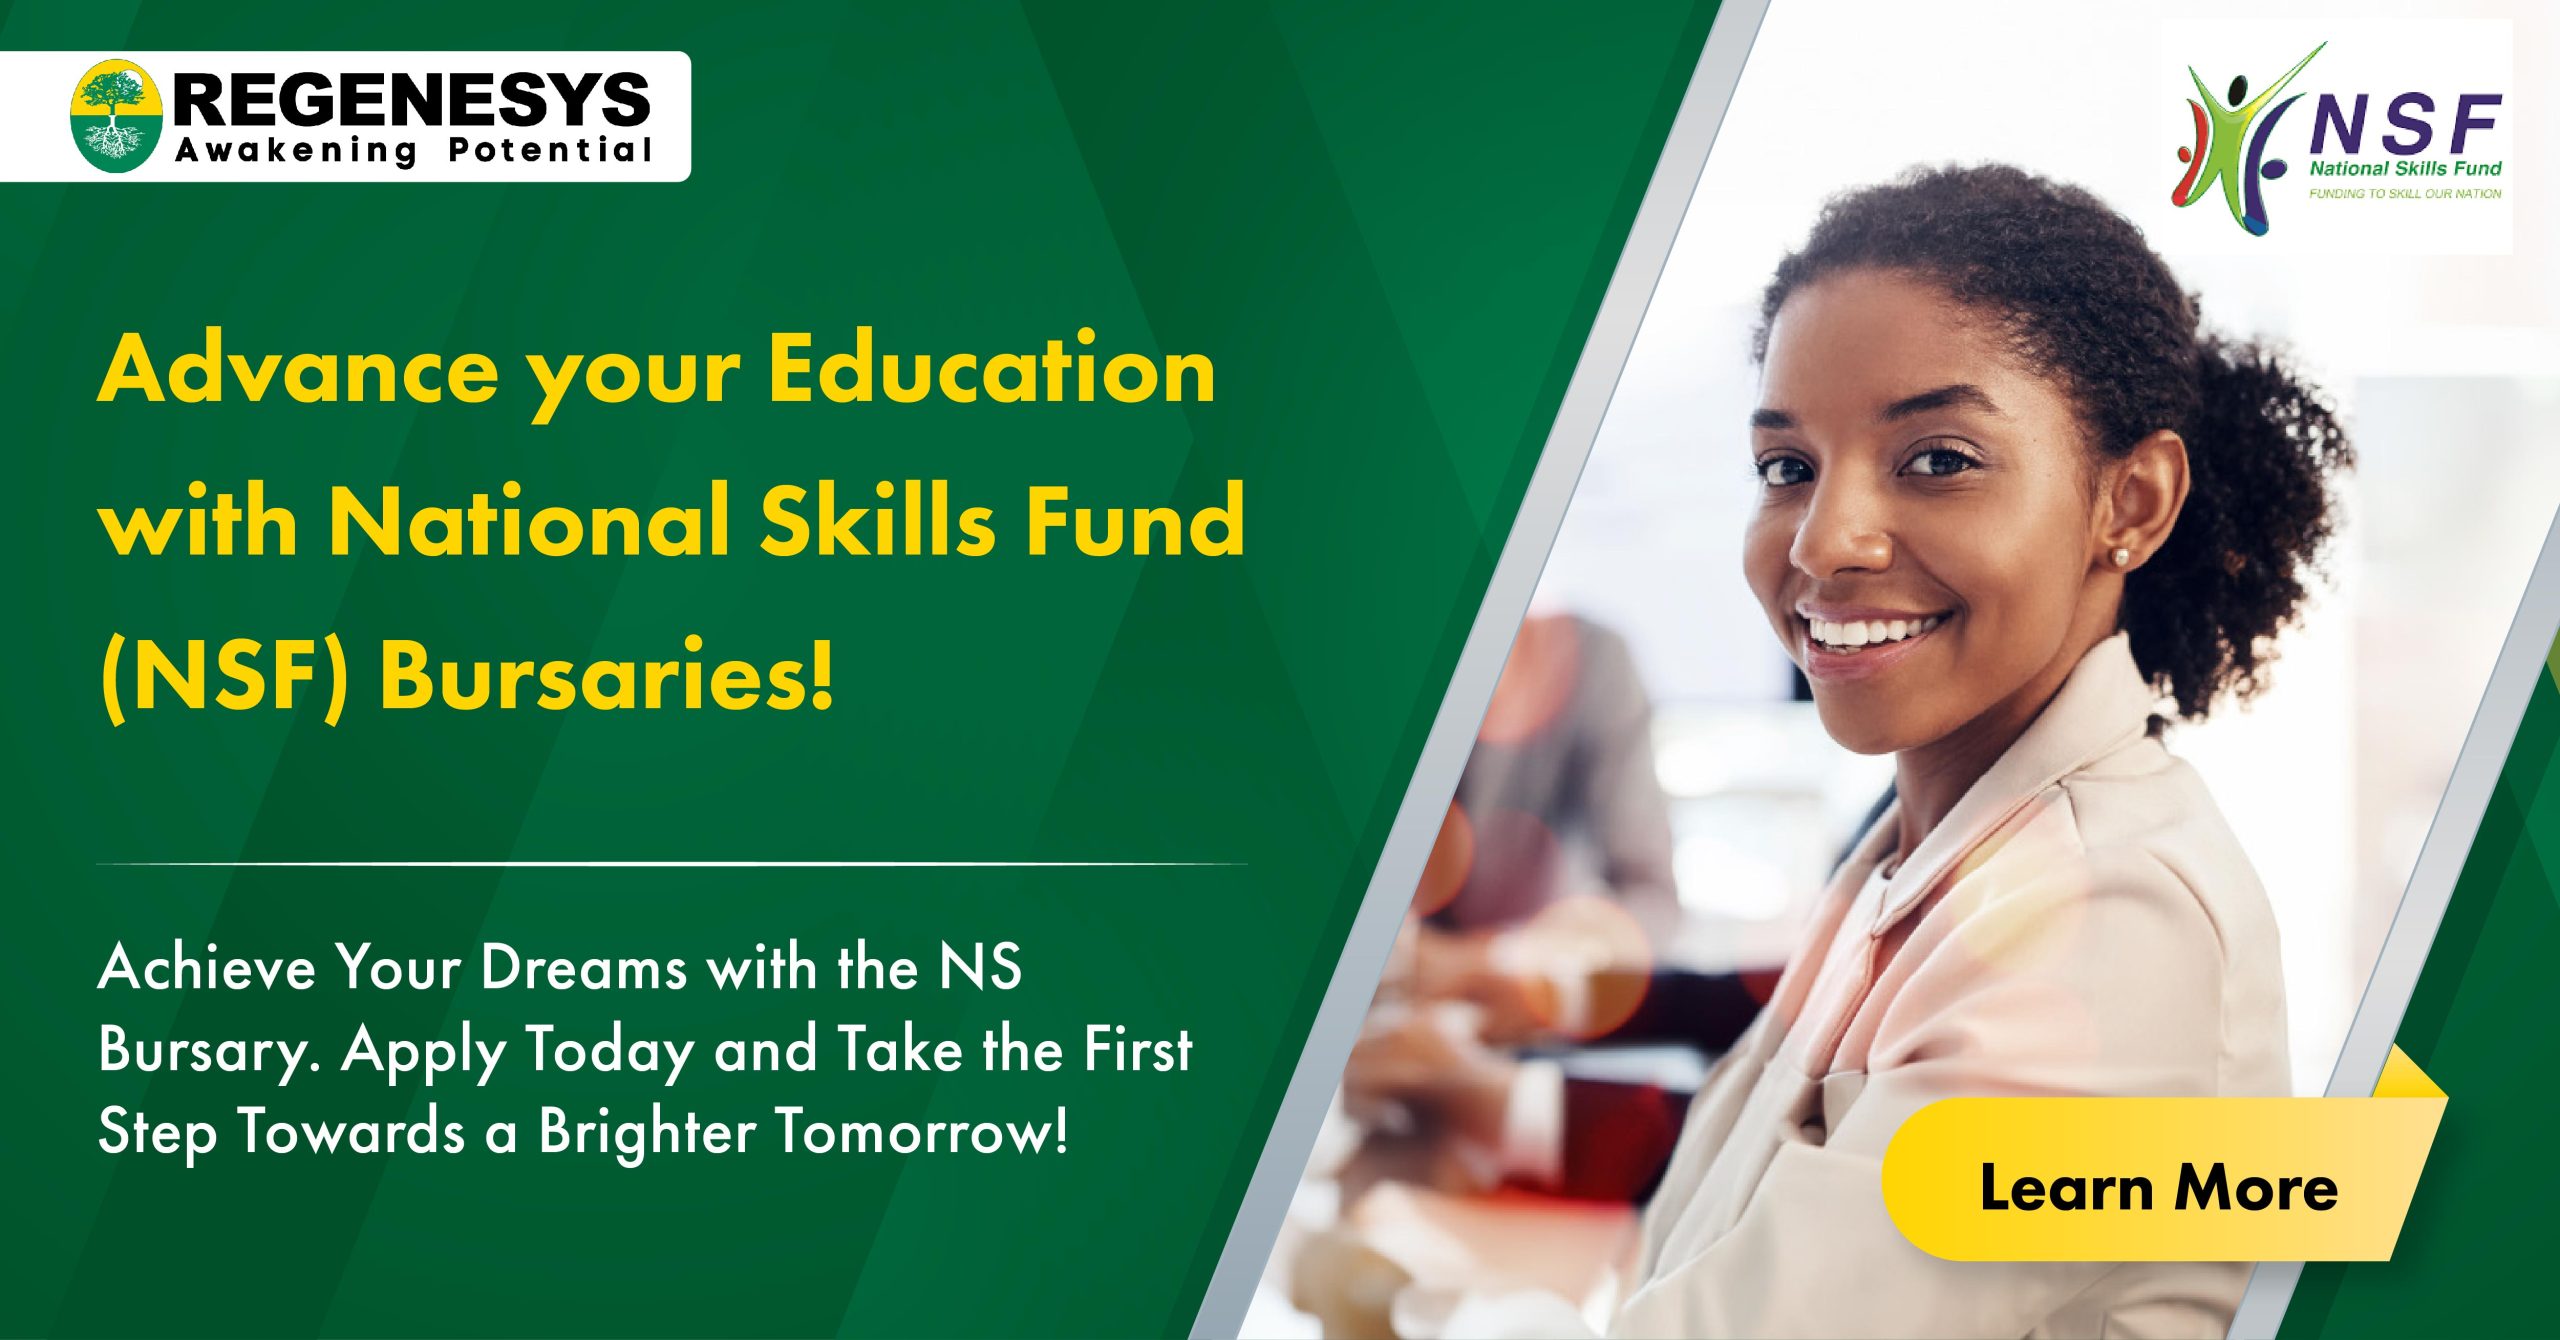 
national skills fund bursary

